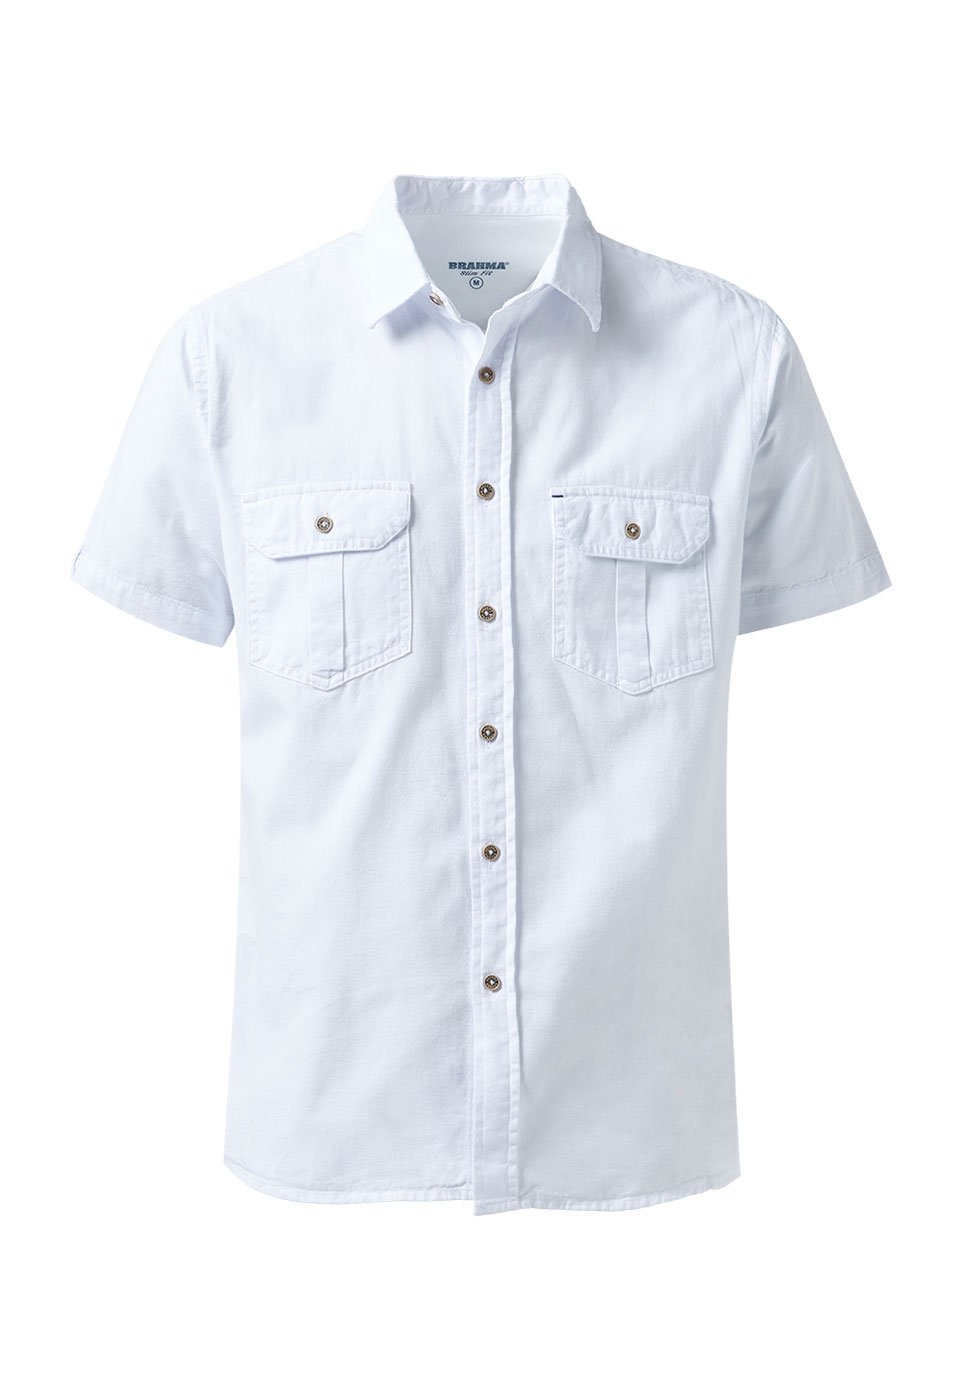 CAM0221-BLA Men's Short Sleeve Shirt